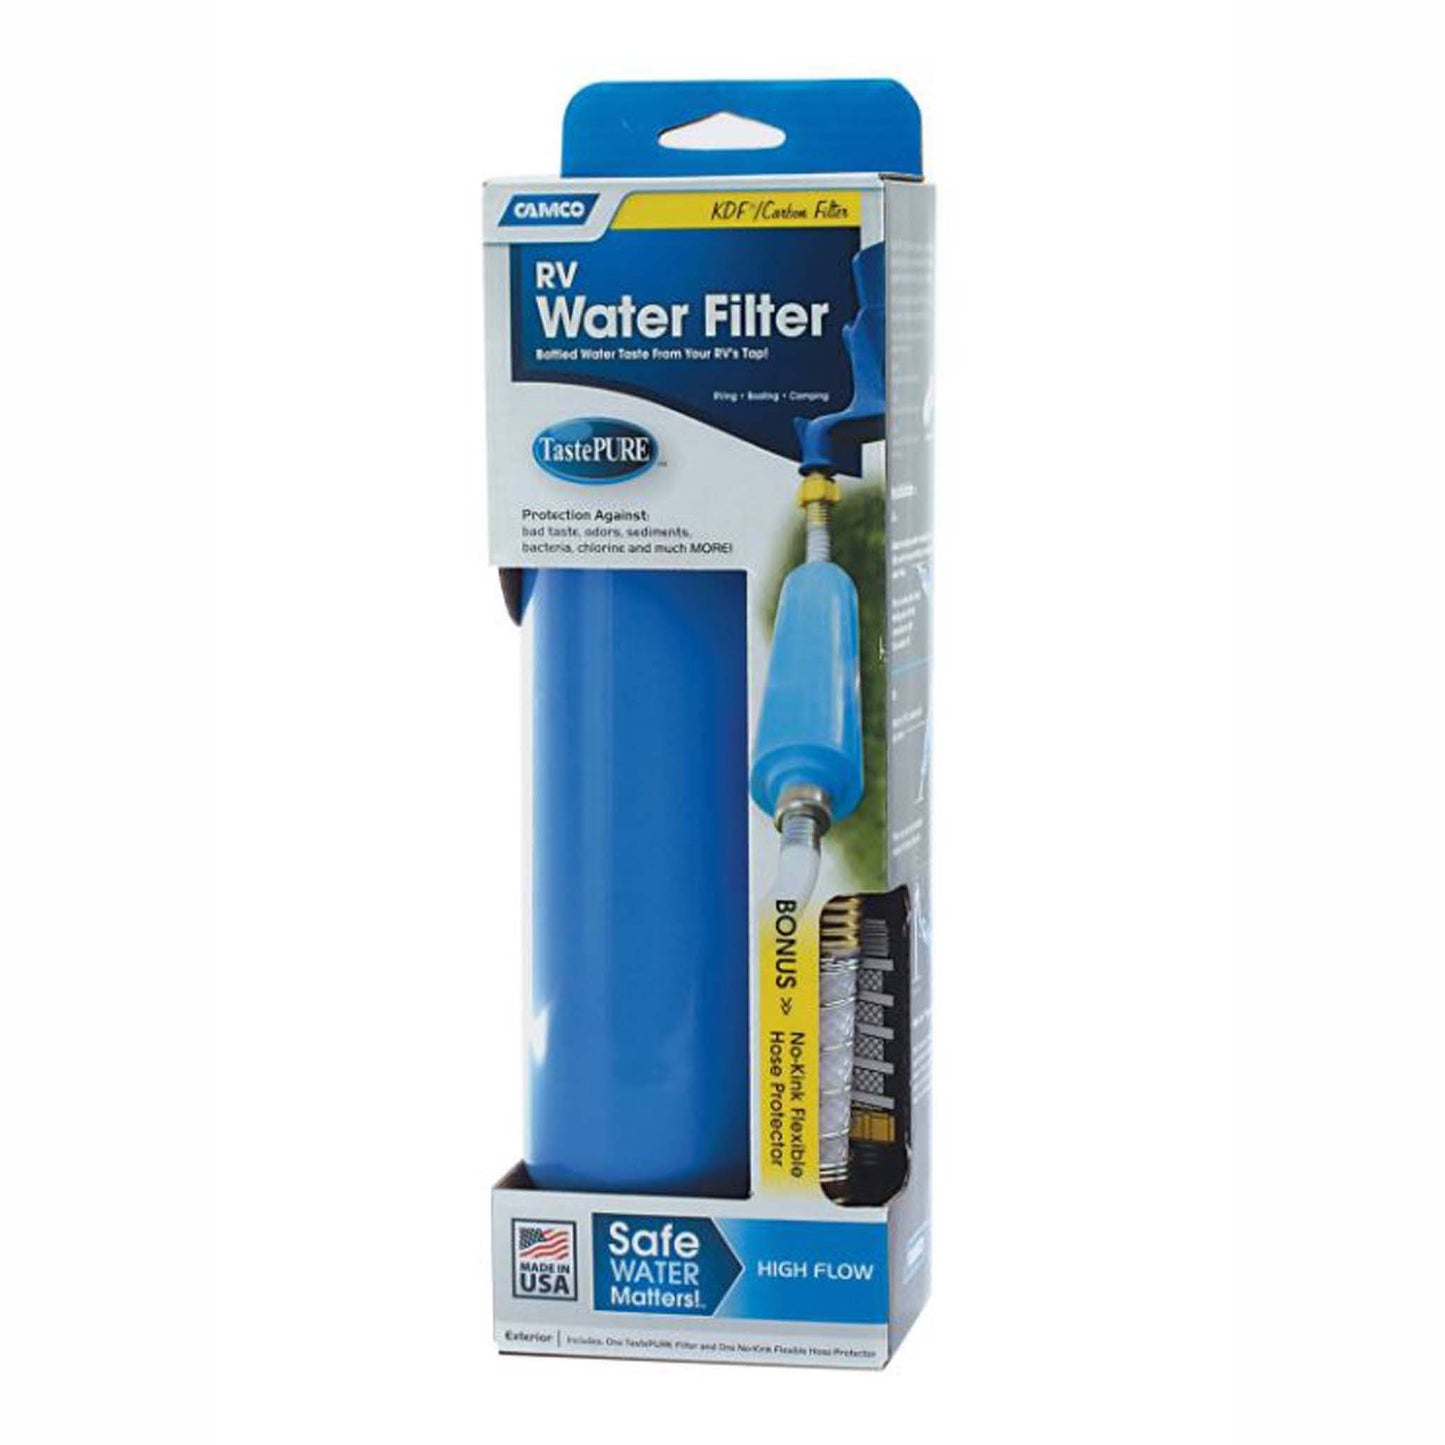 TastePURE Water Filter (KDF) - w / Flexible Hose Protector, LLC